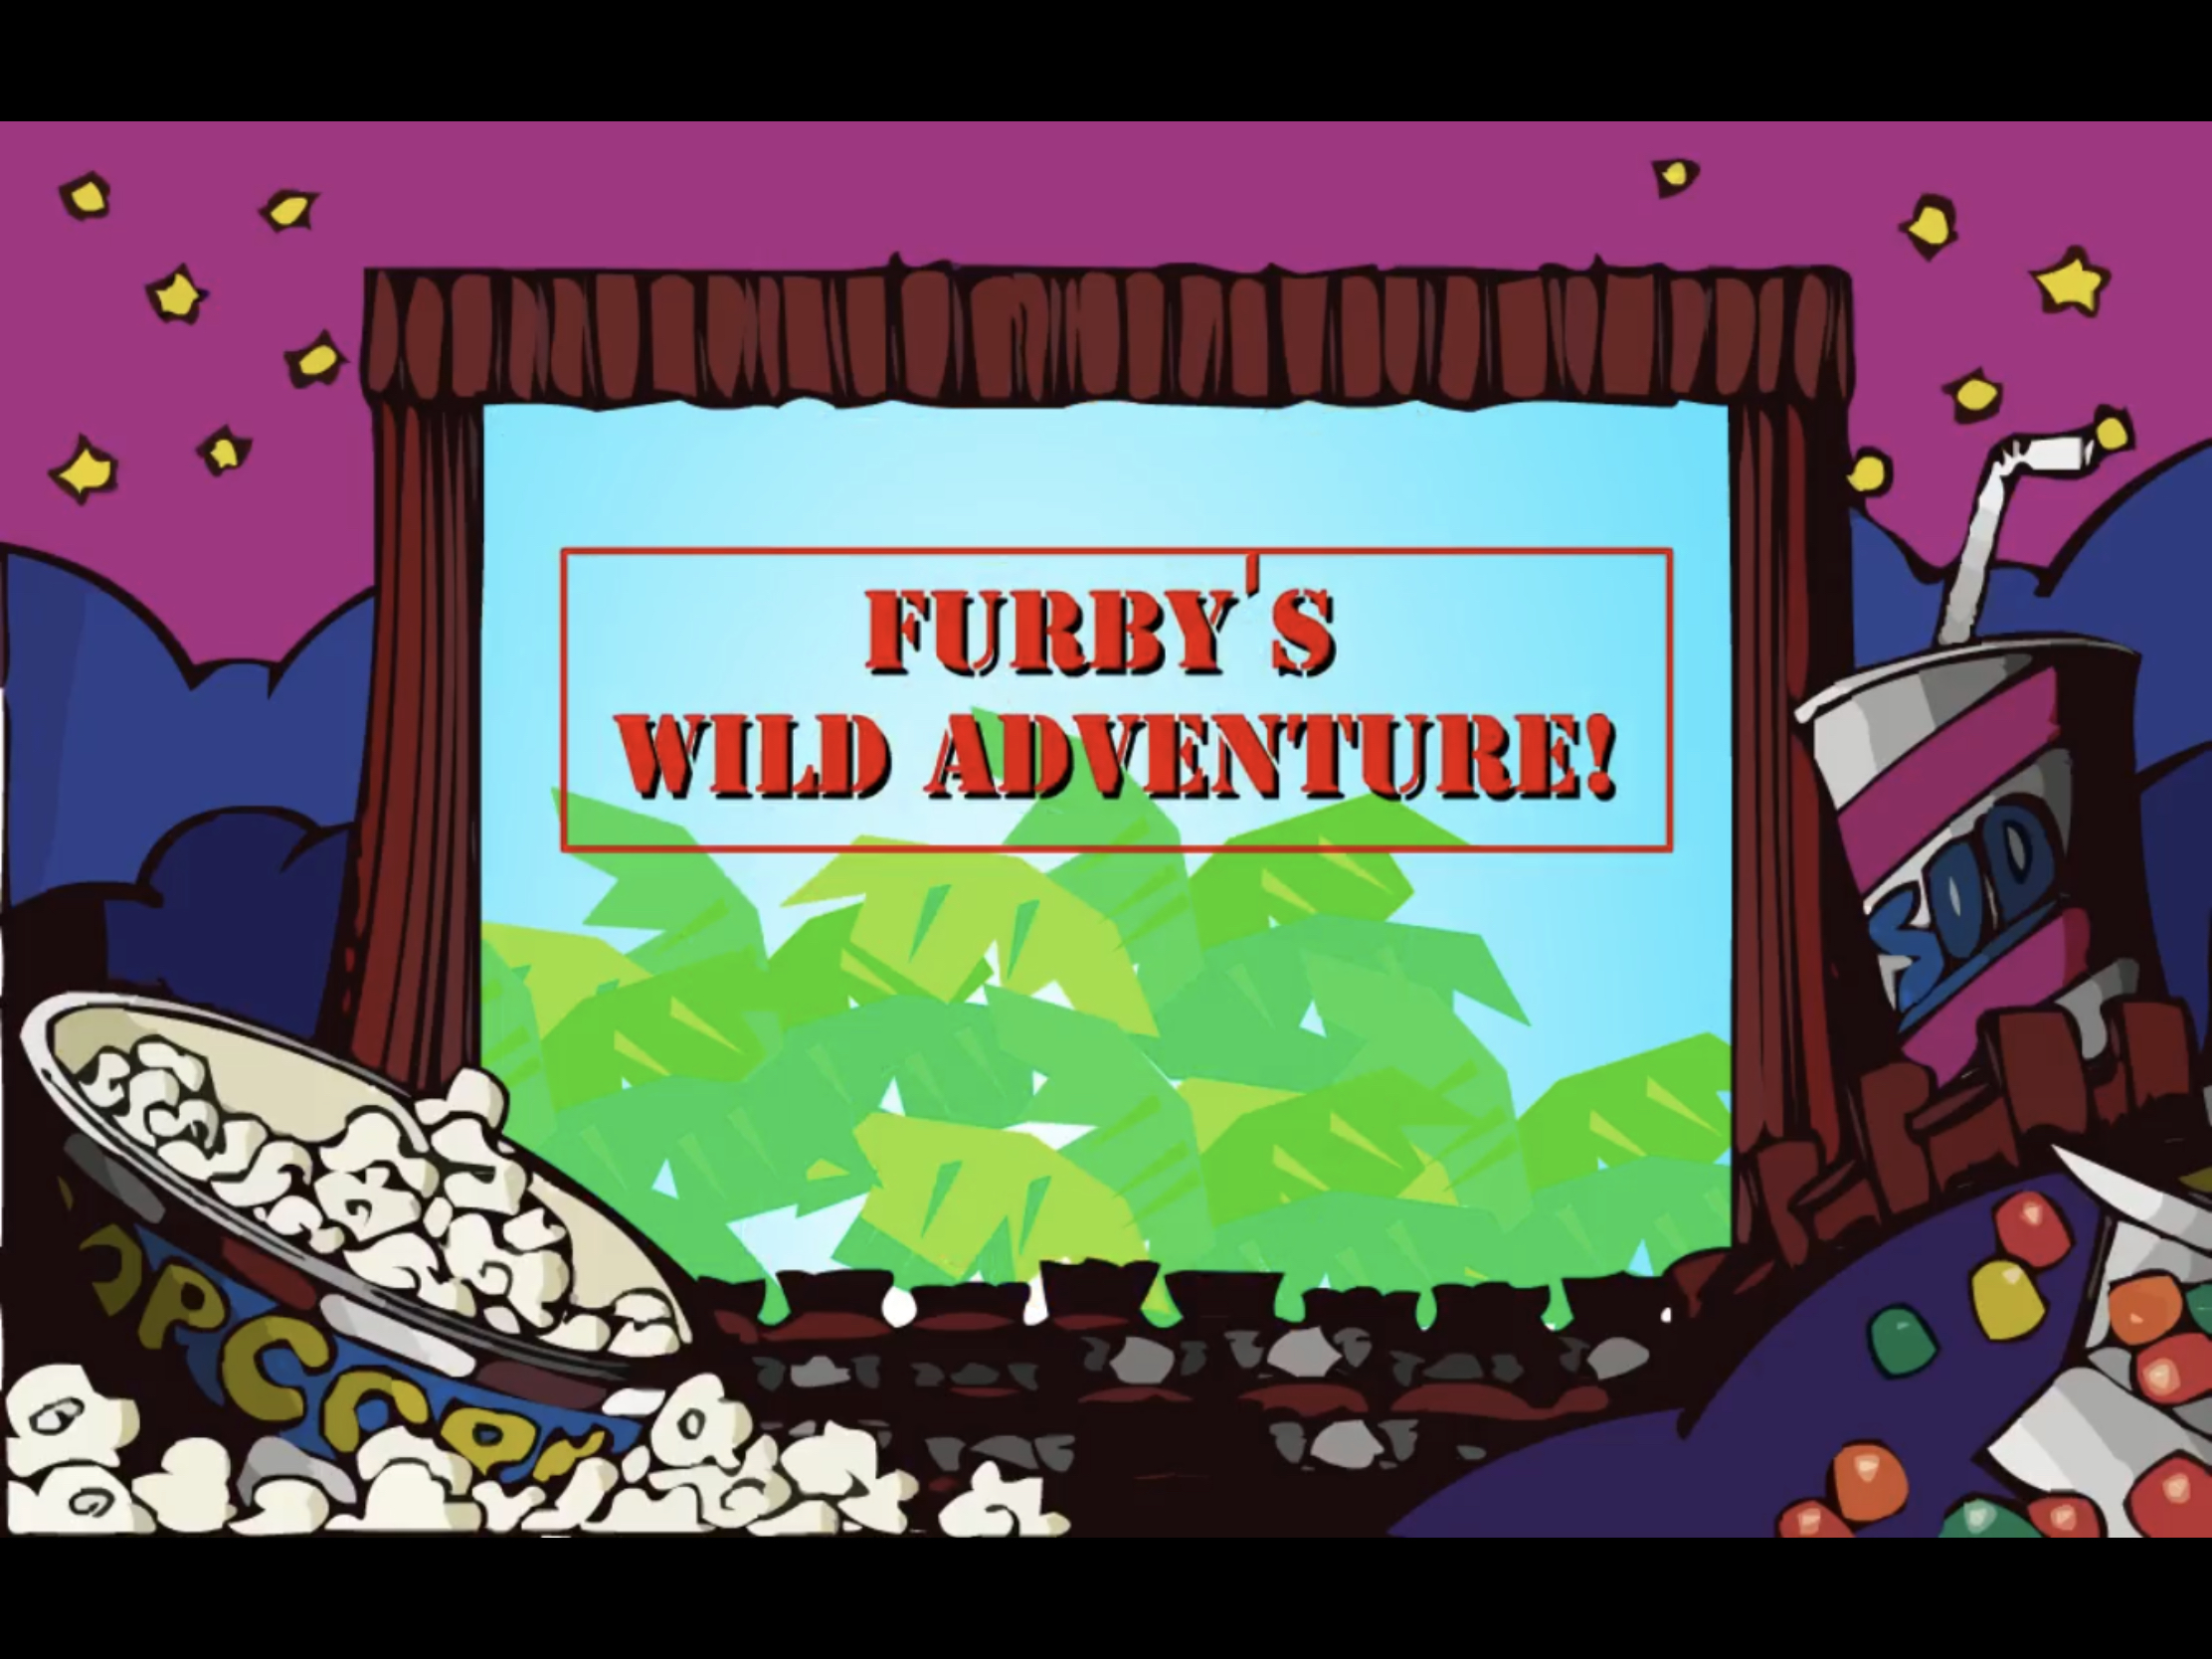 Furbys wild adventure title.jpeg